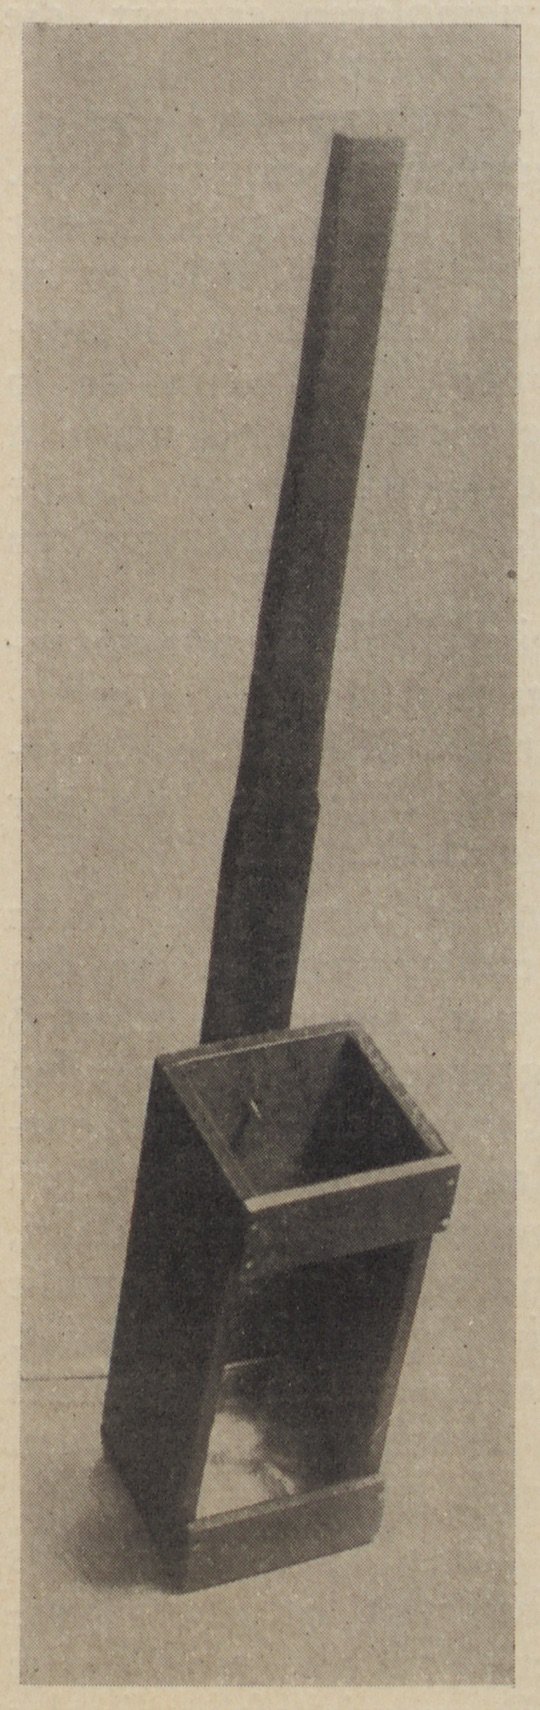 Abbildung eines selbstgebauten Periskops (Magnus-Hirschfeld-Gesellschaft Public Domain Mark)